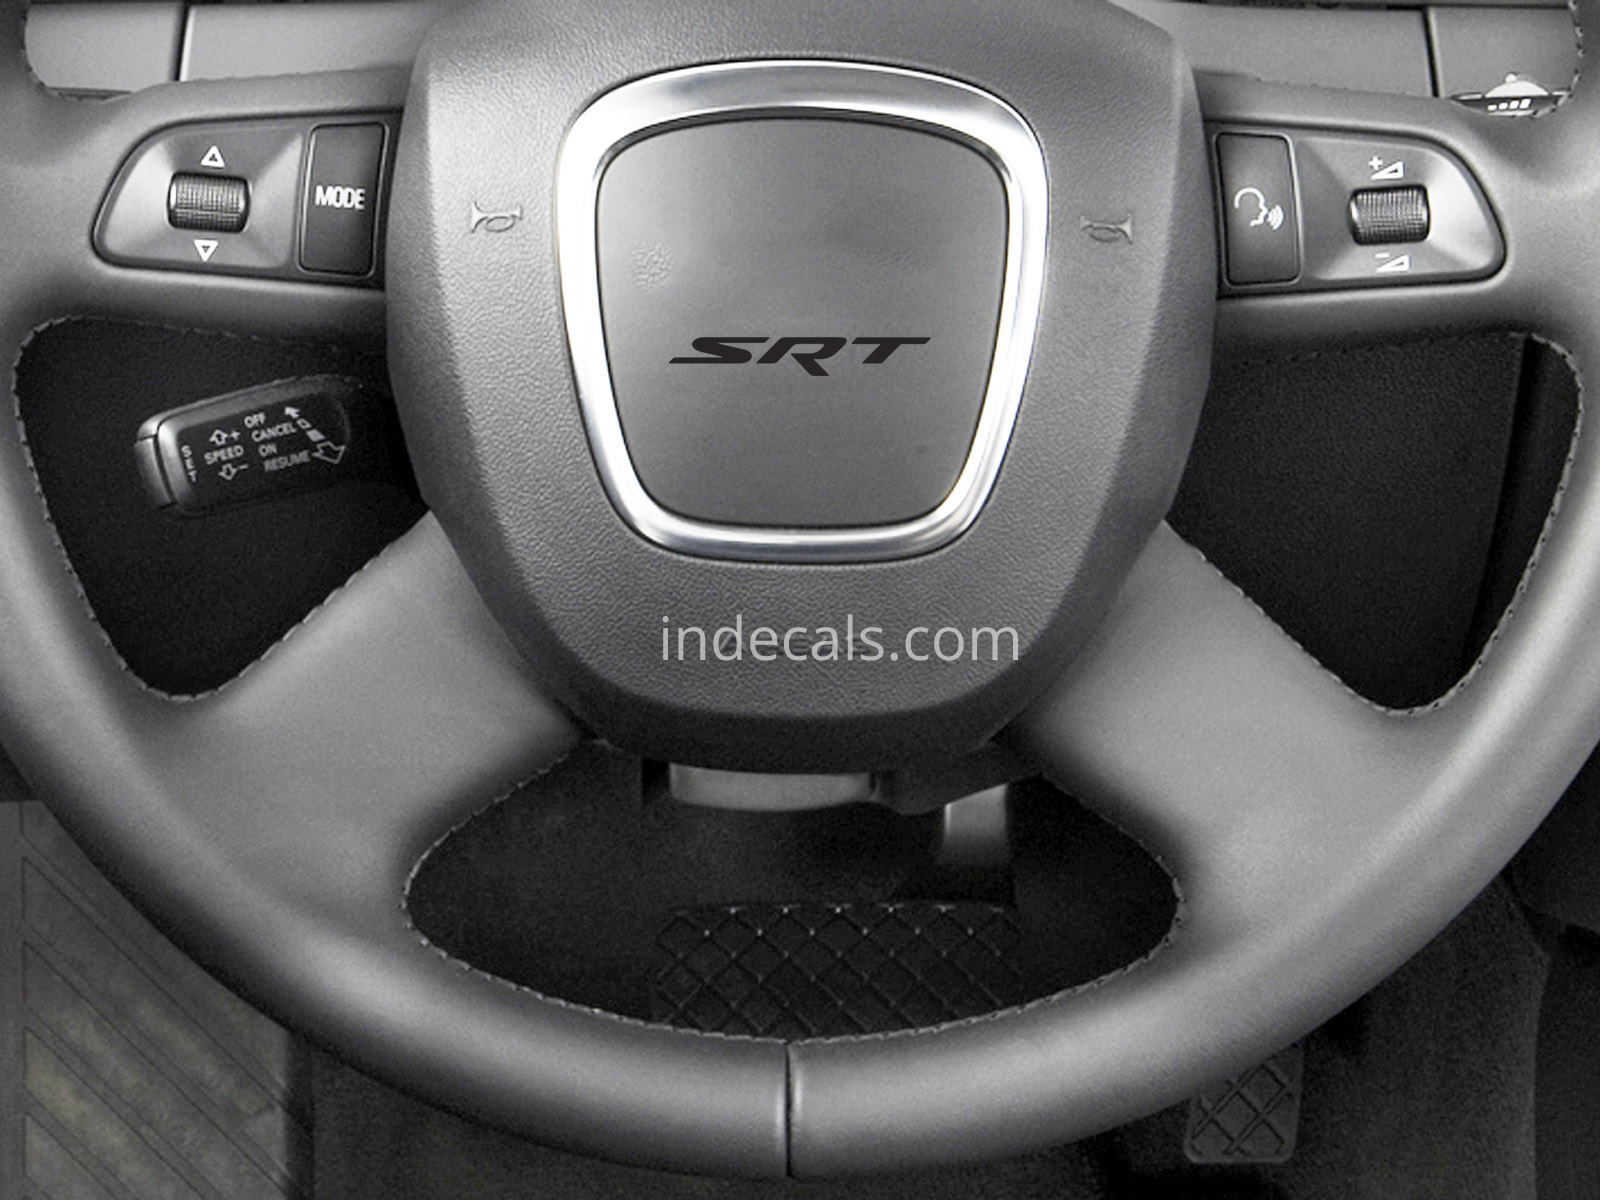 3 x Dodge SRT Stickers for Steering Wheel - Black